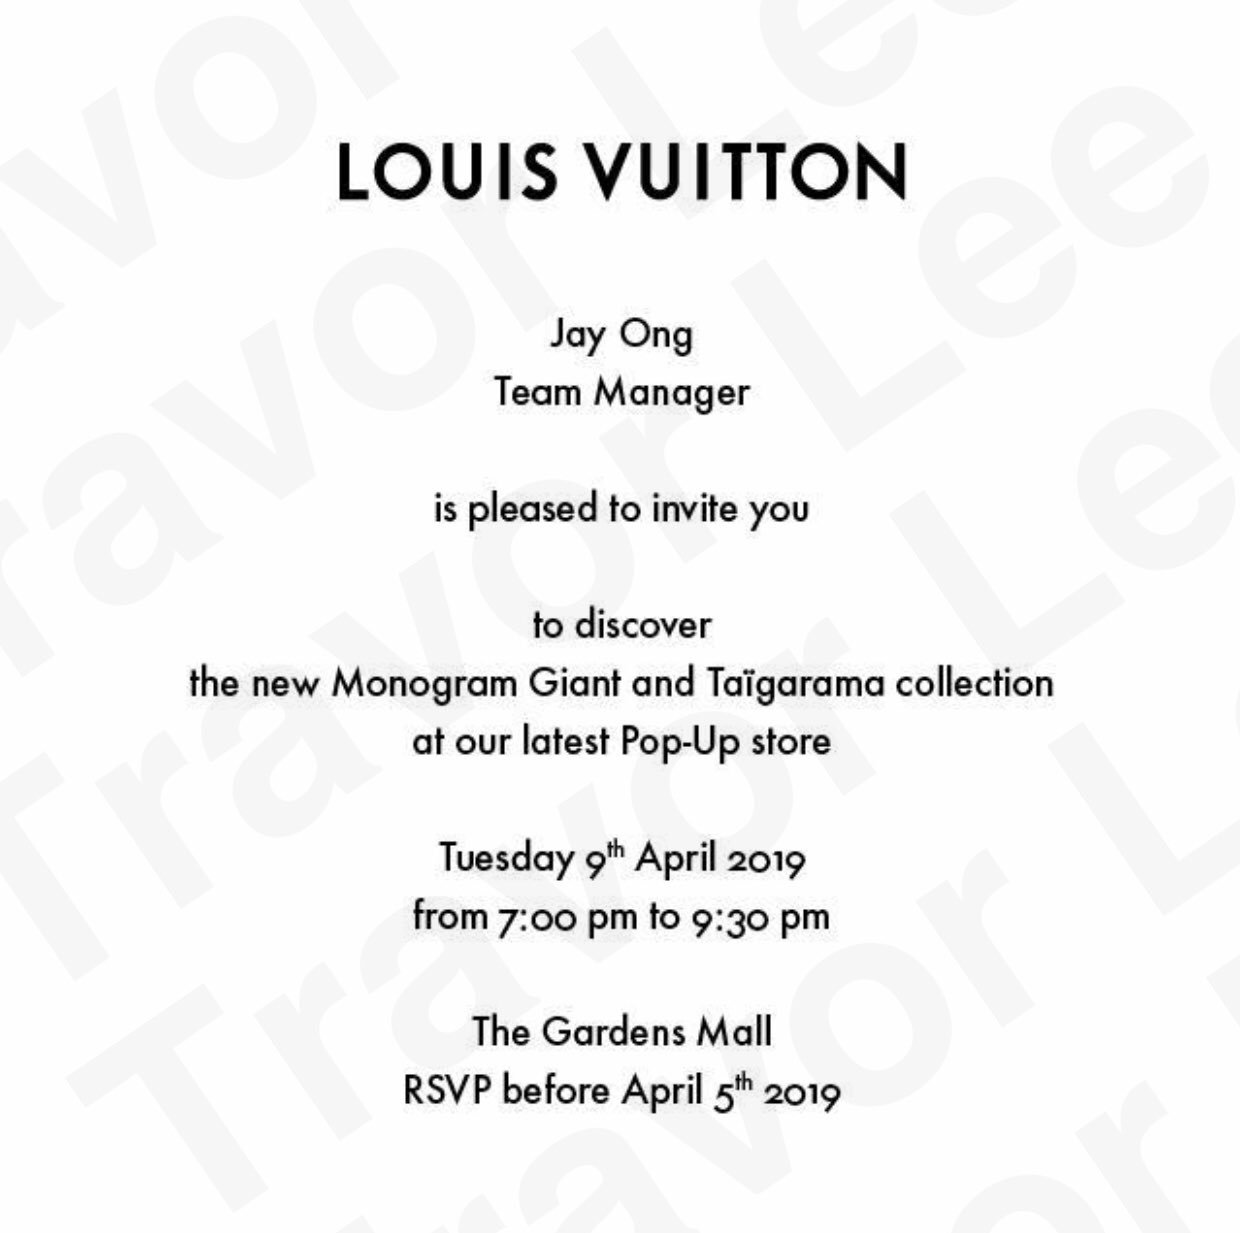 Travor Lee sur X : Thanks Louis Vuitton Malaysia for the invite